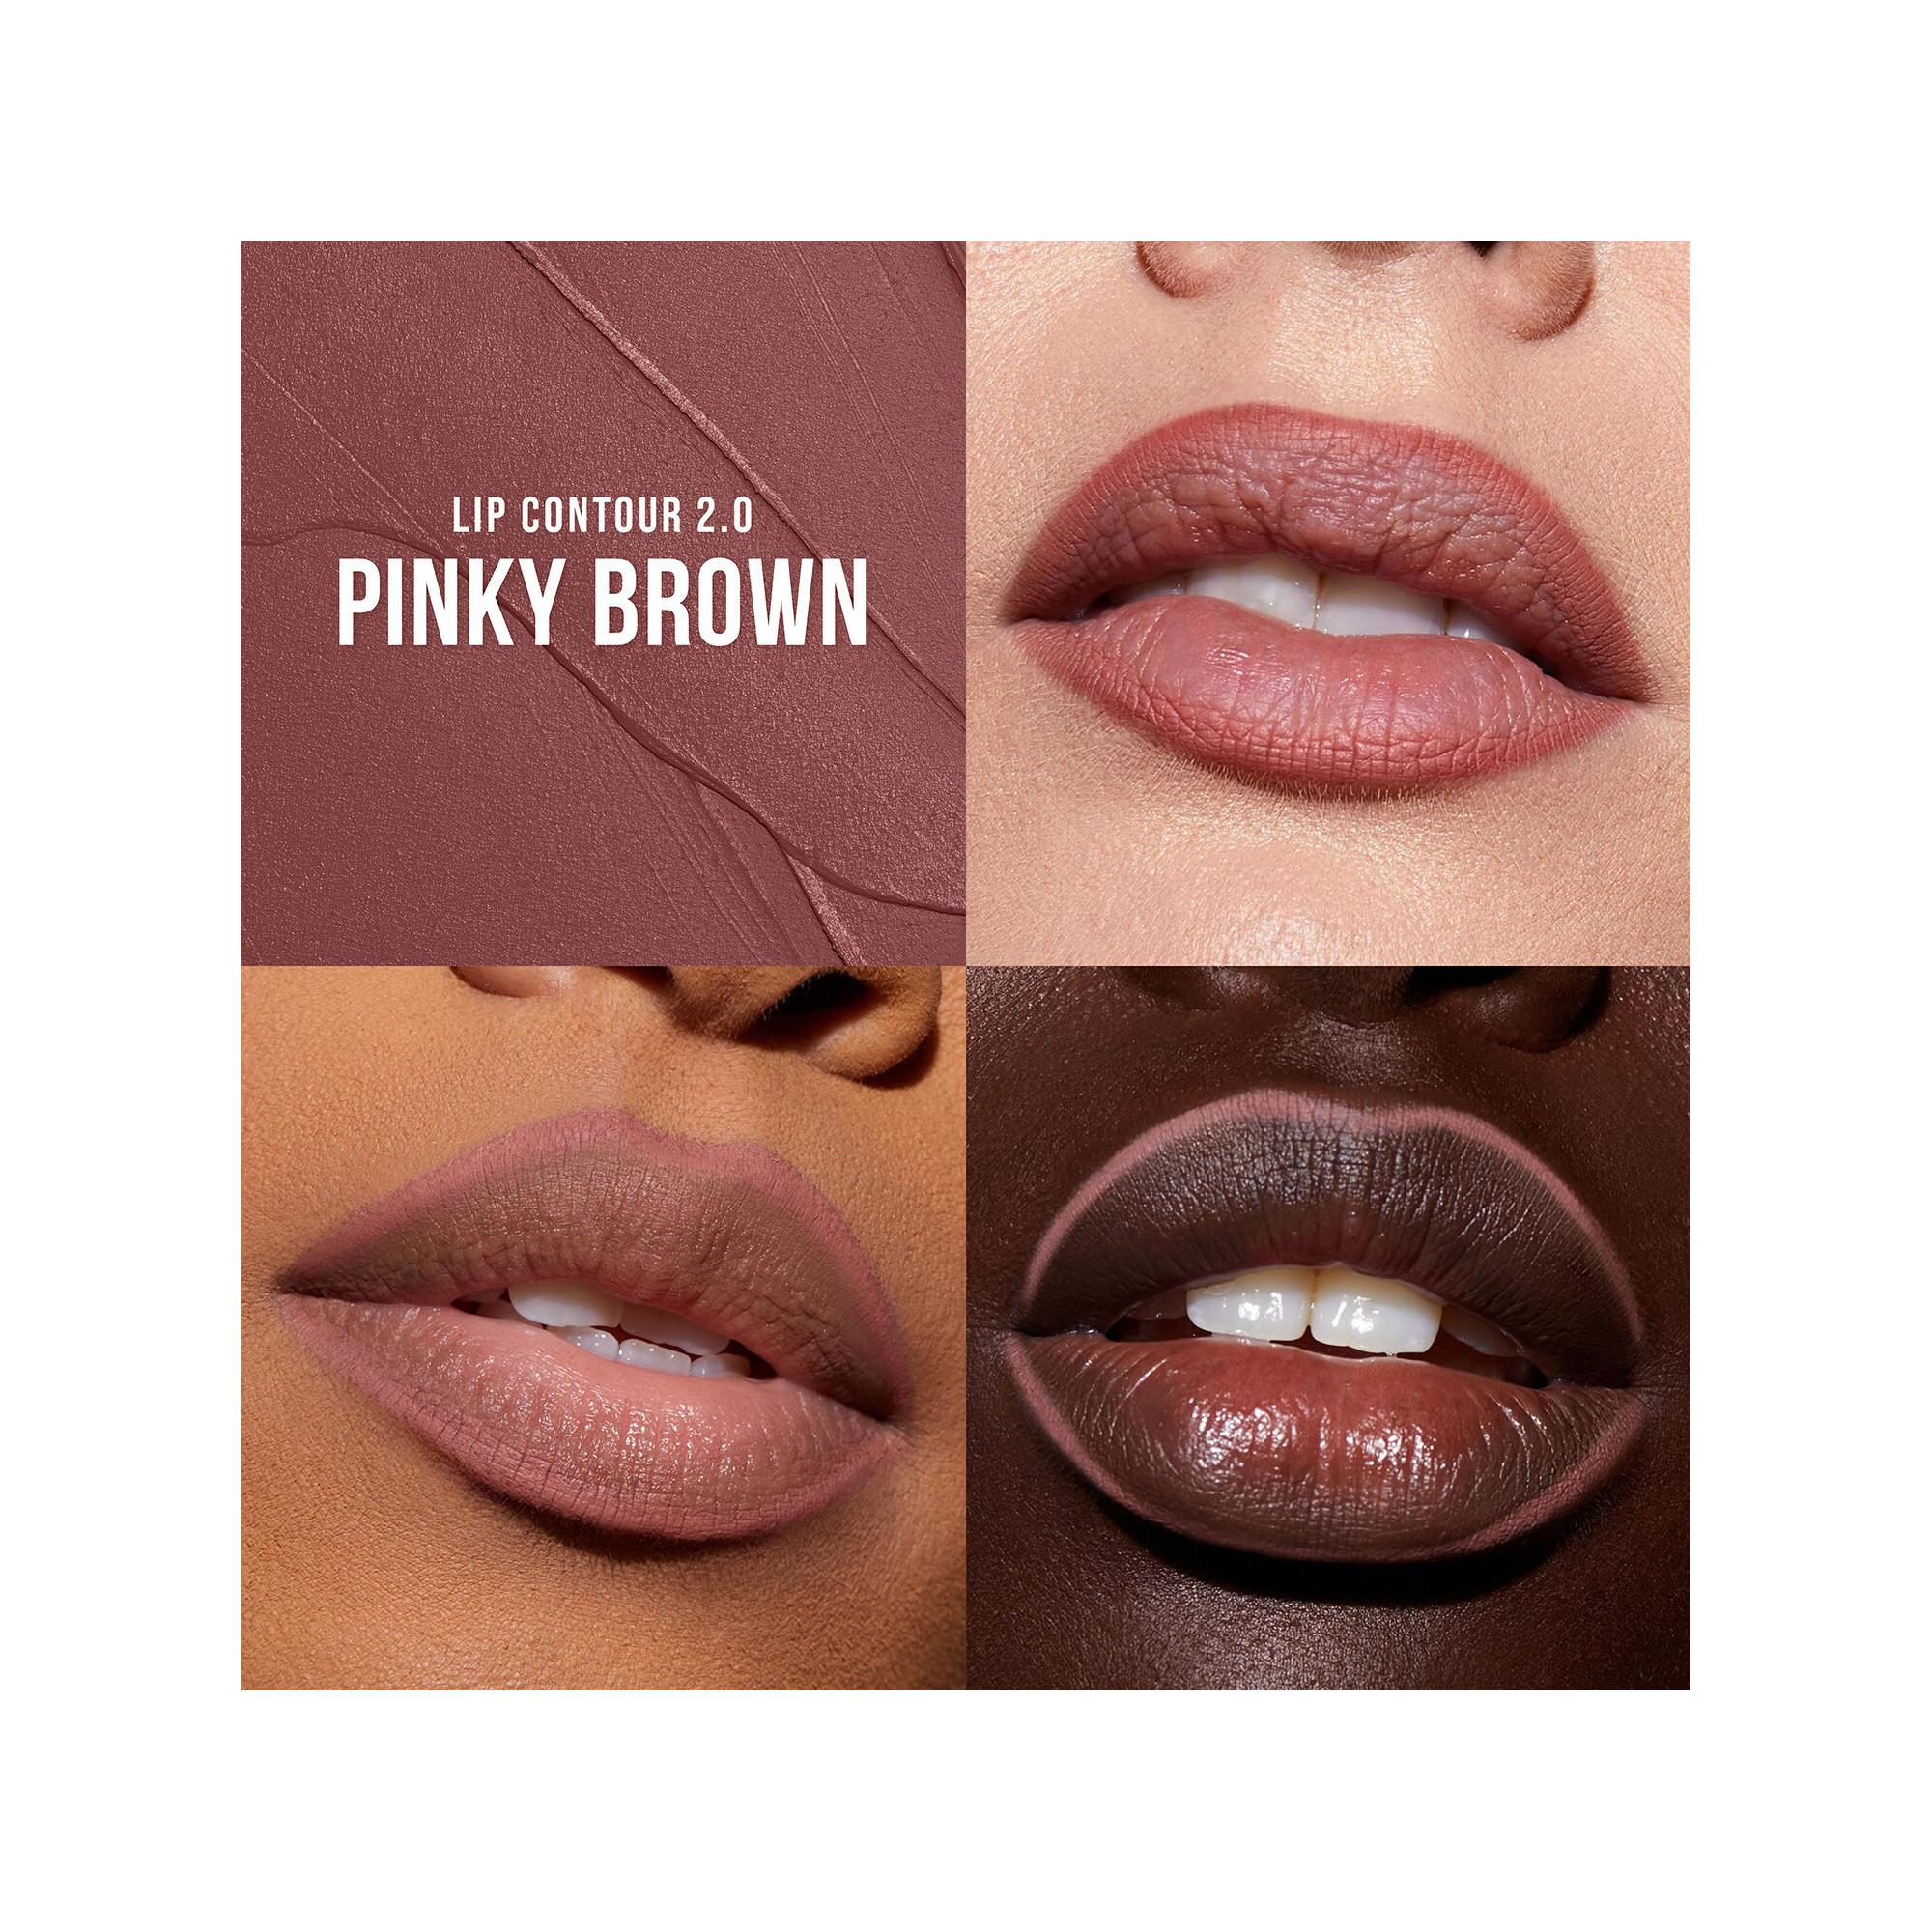 Huda Beauty  Lip Contour Mini Duo - Yummy Browns - Lippenkonturenstifte 